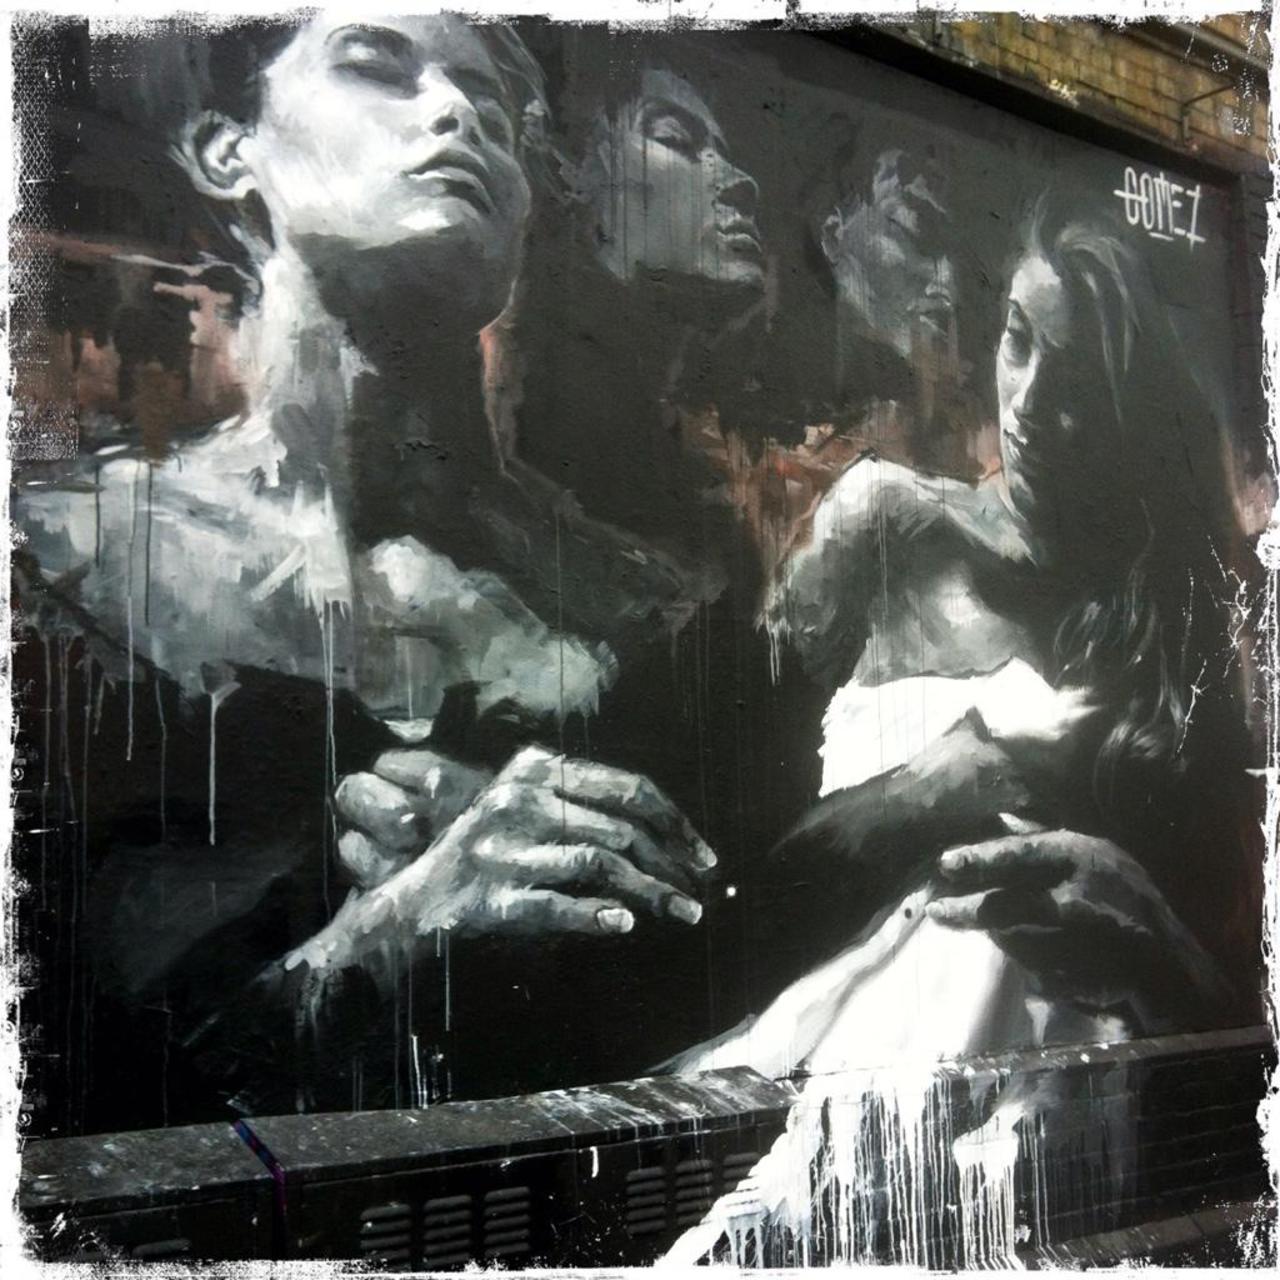 RT @BrickLaneArt: Work by Luis Gomez at the #ShoreditchCurtain 

#streetart #art #graffiti http://t.co/2BvhhyNifG